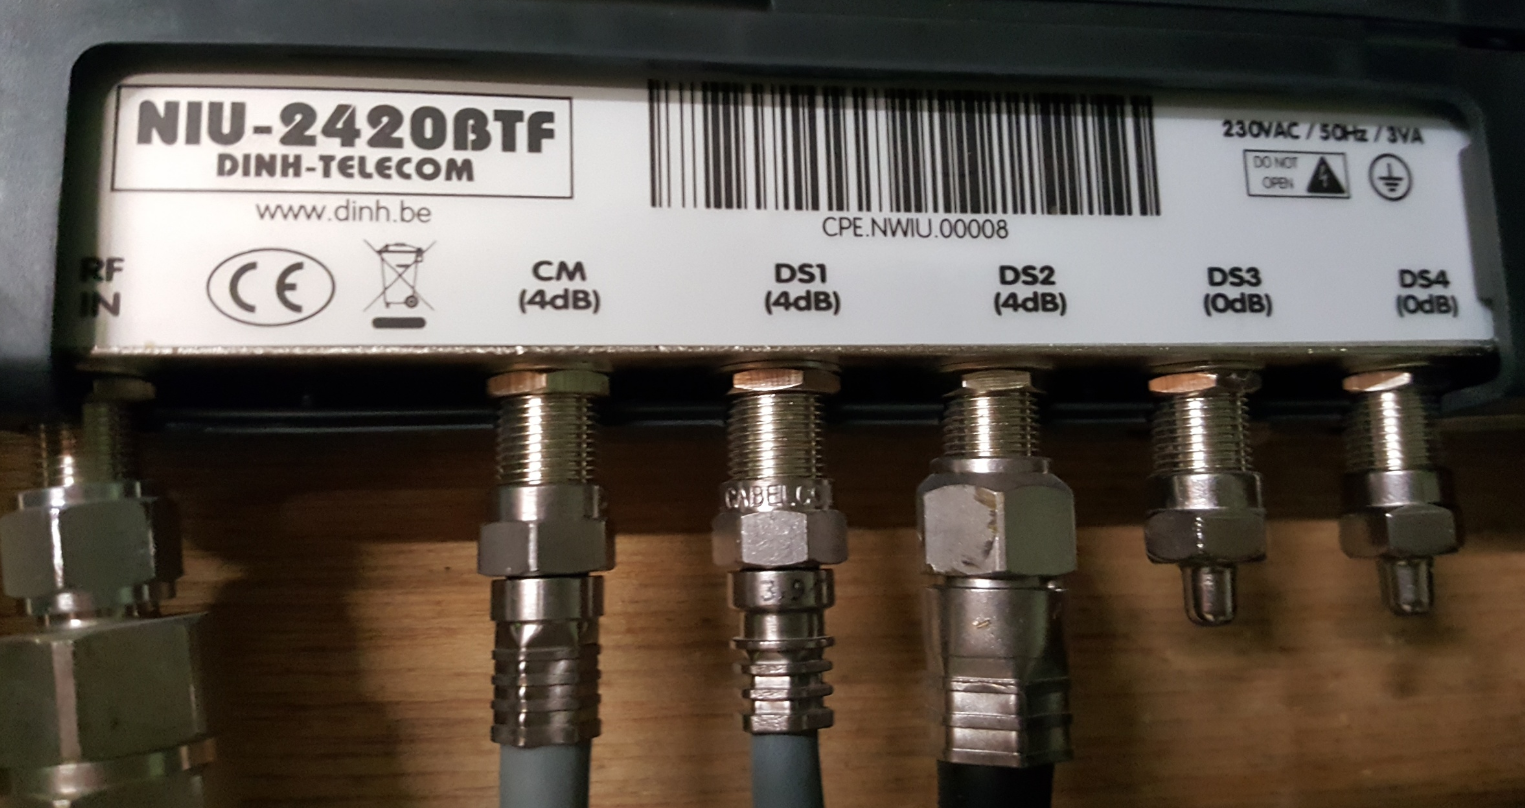 NIU-2420BTF aansluiting: connector en 0DB? - Pagina 2 -